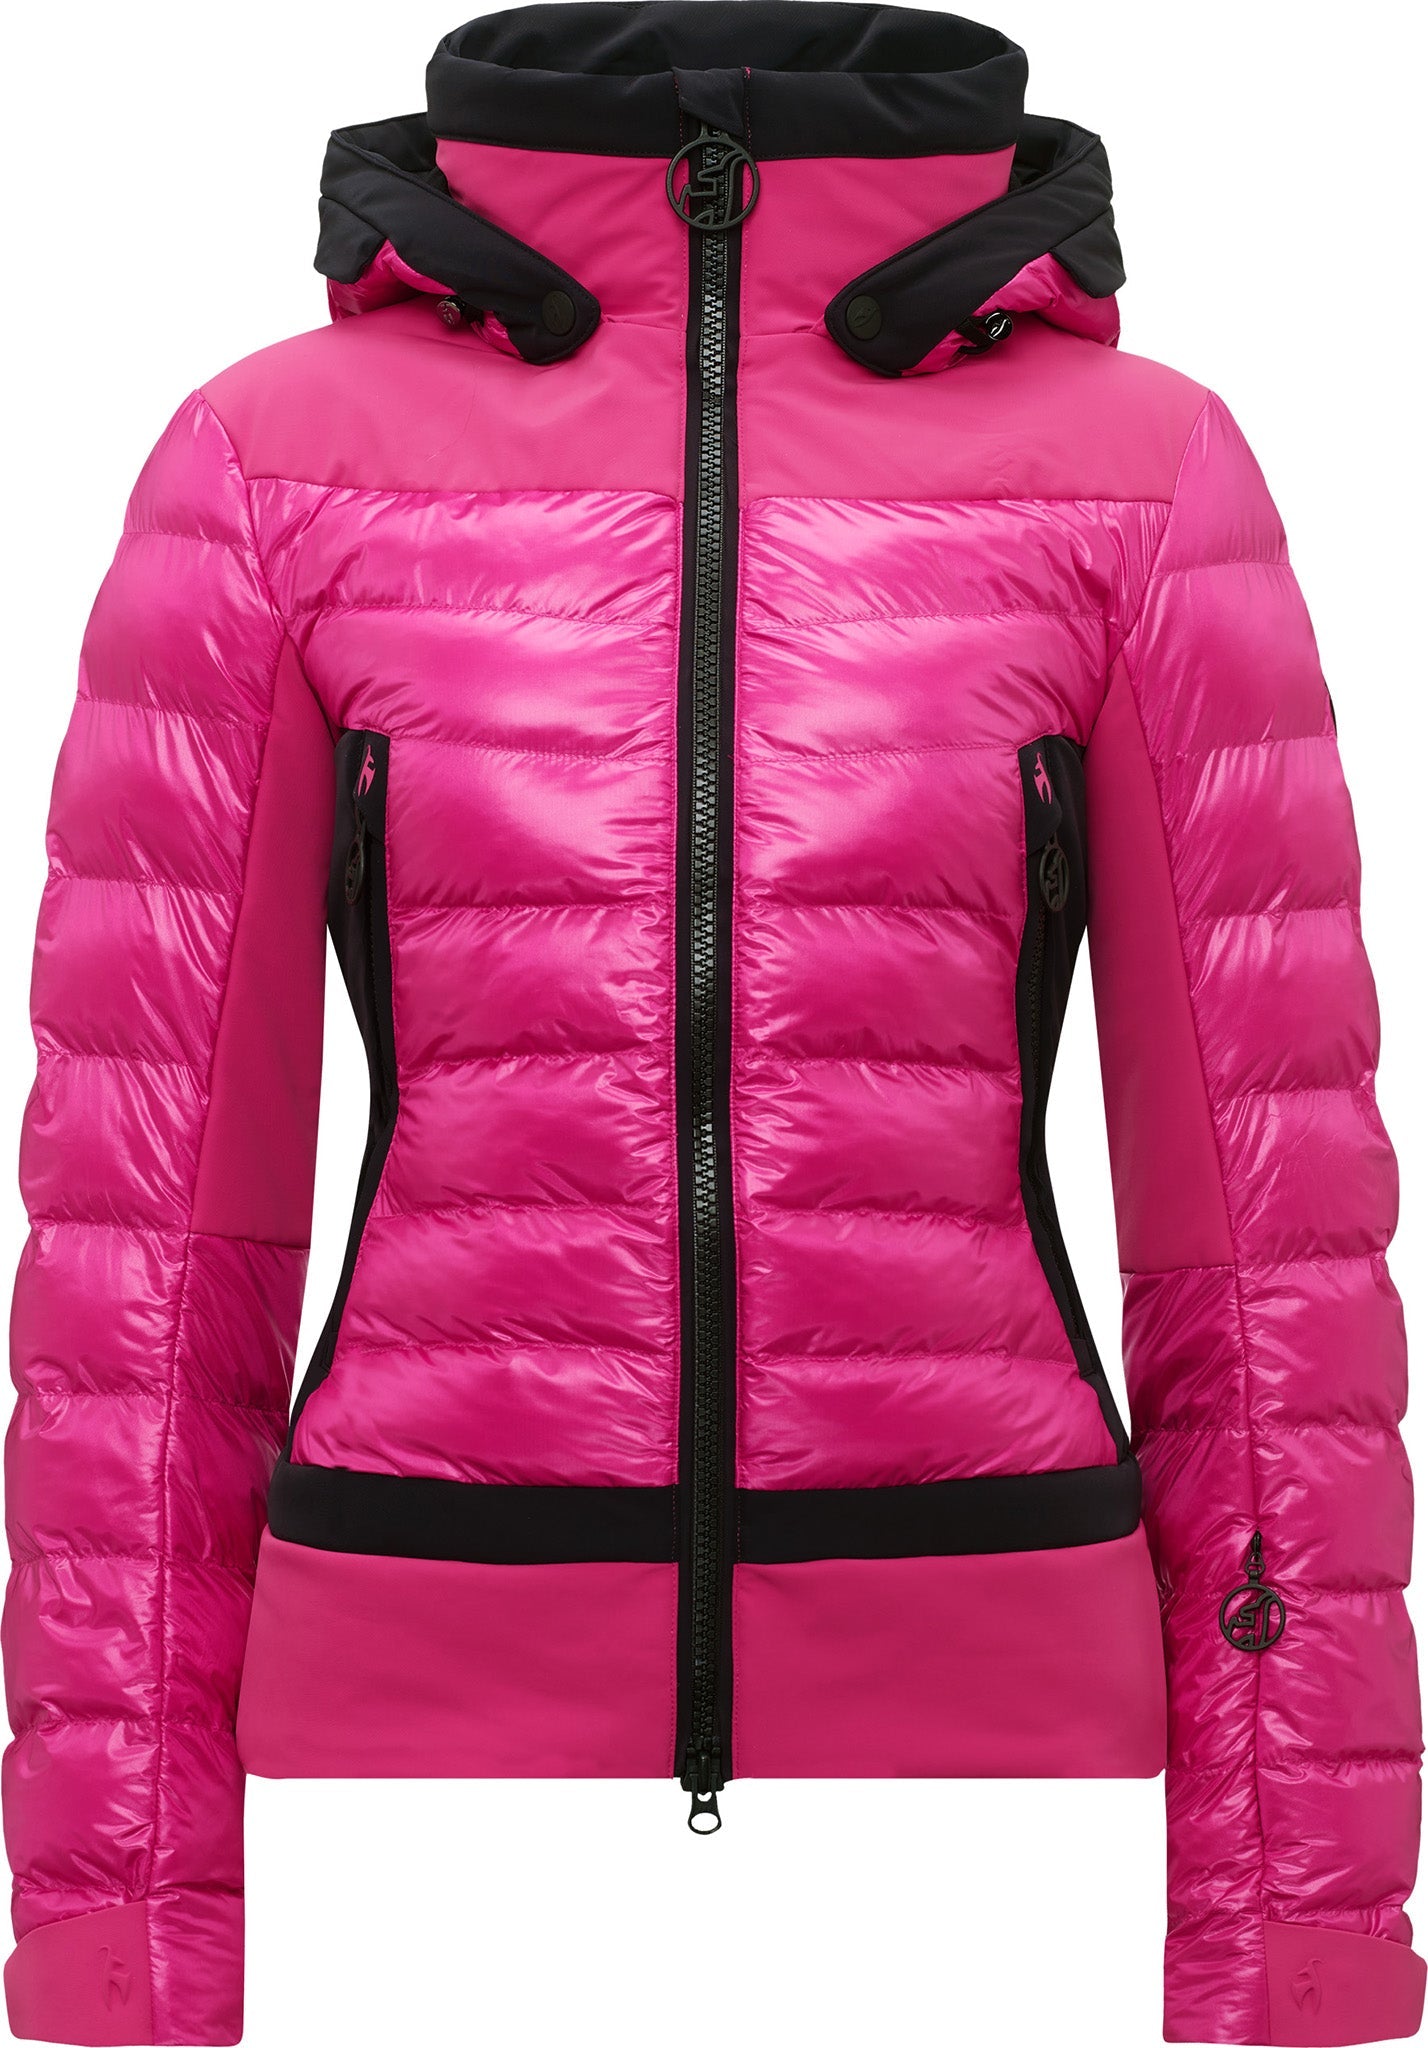 Toni Sailer Women Ski Jacket MALOU pink red, Ladies skiwear, Skiwear, Alpine Skis